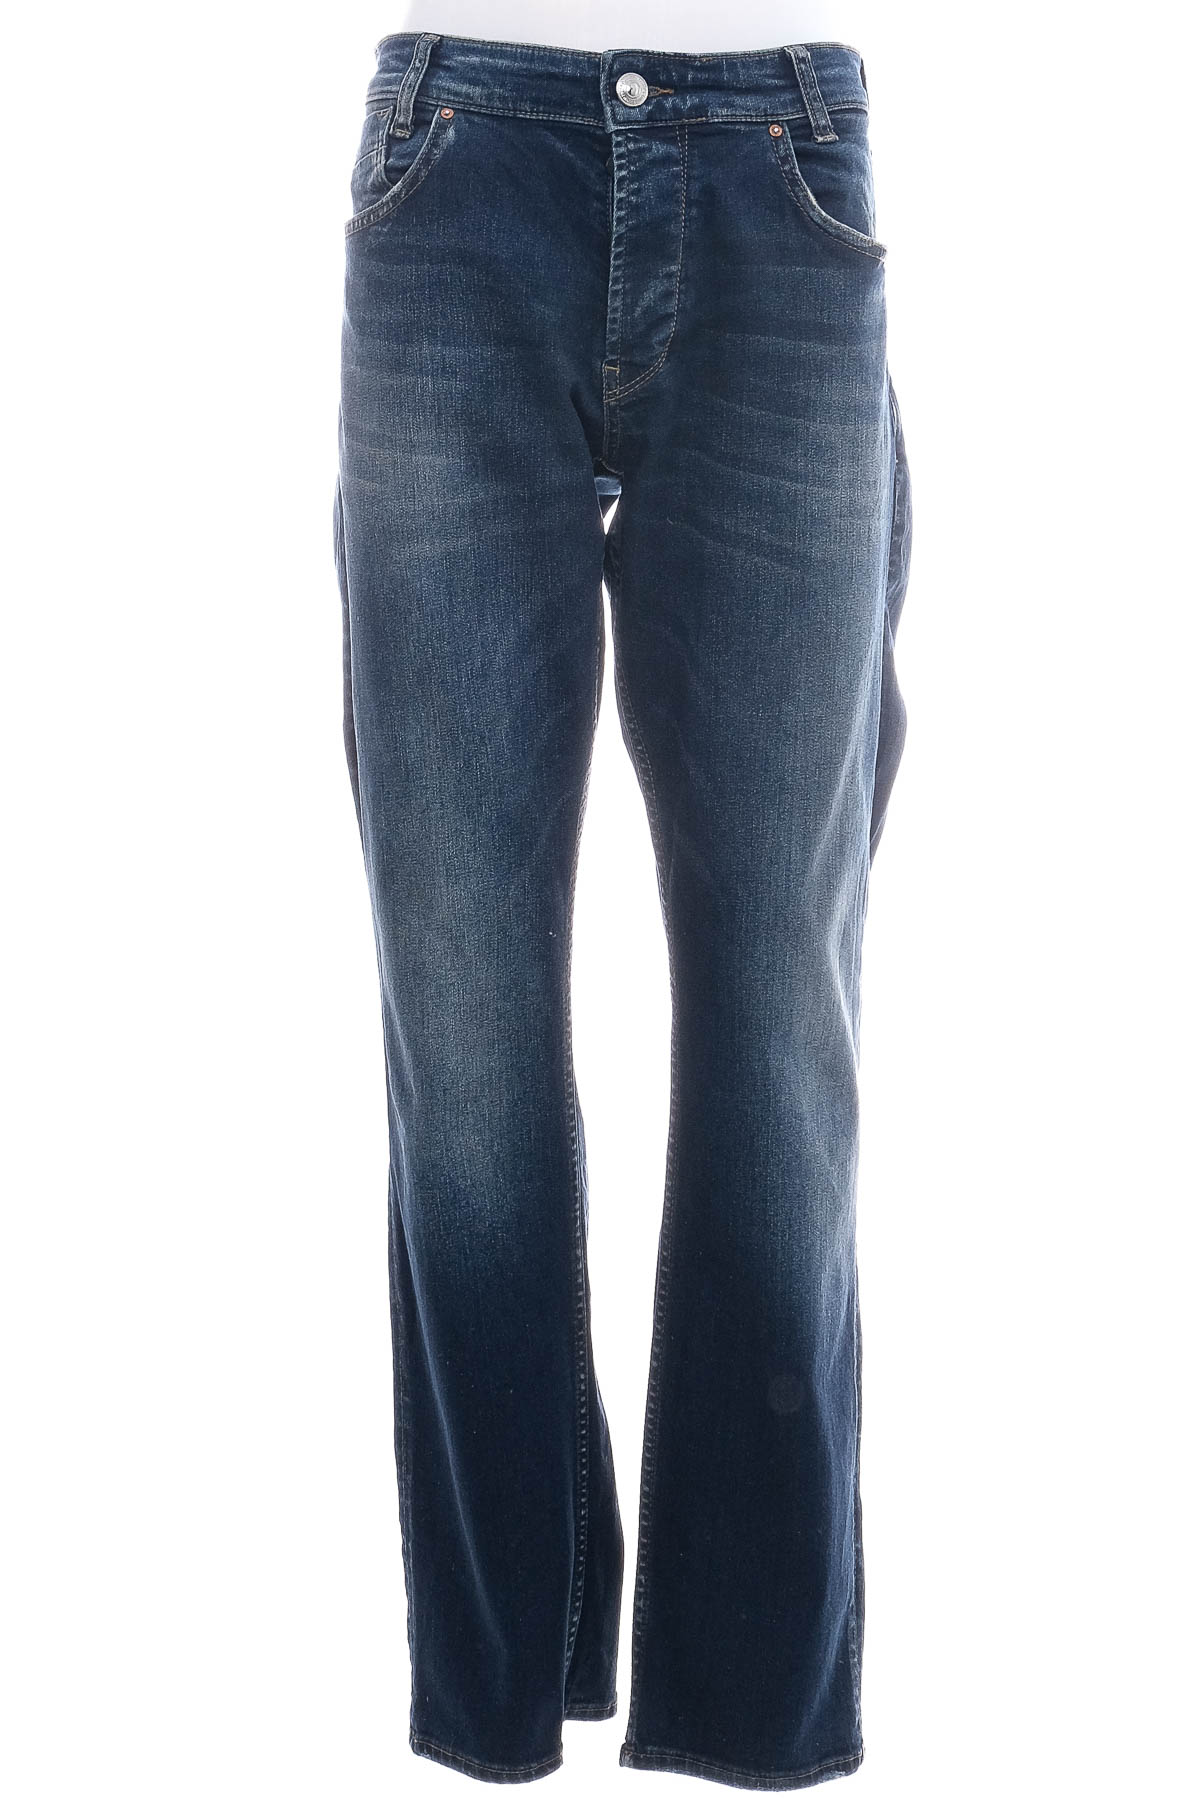 Men's jeans - GABBIA - 0